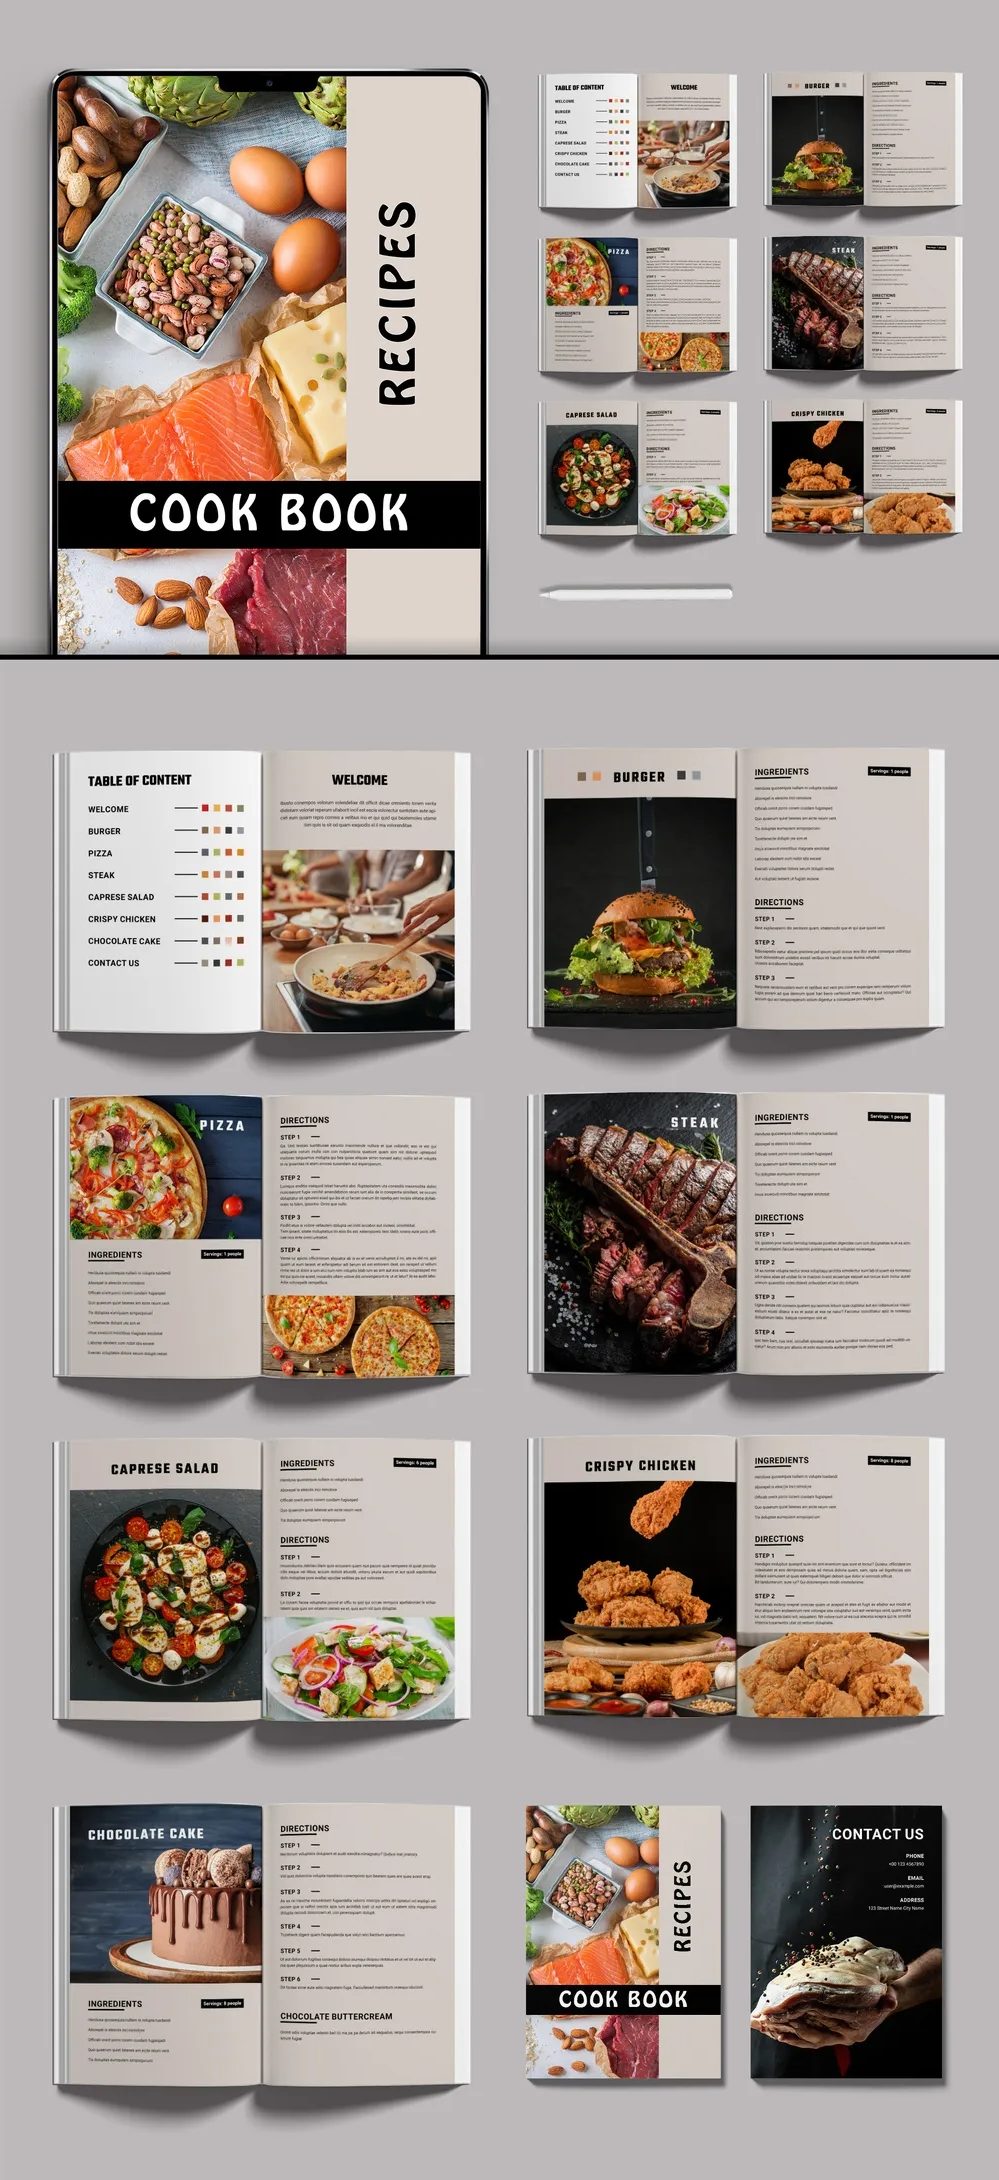 Adobestock - Cook Book Template Layout 735759871